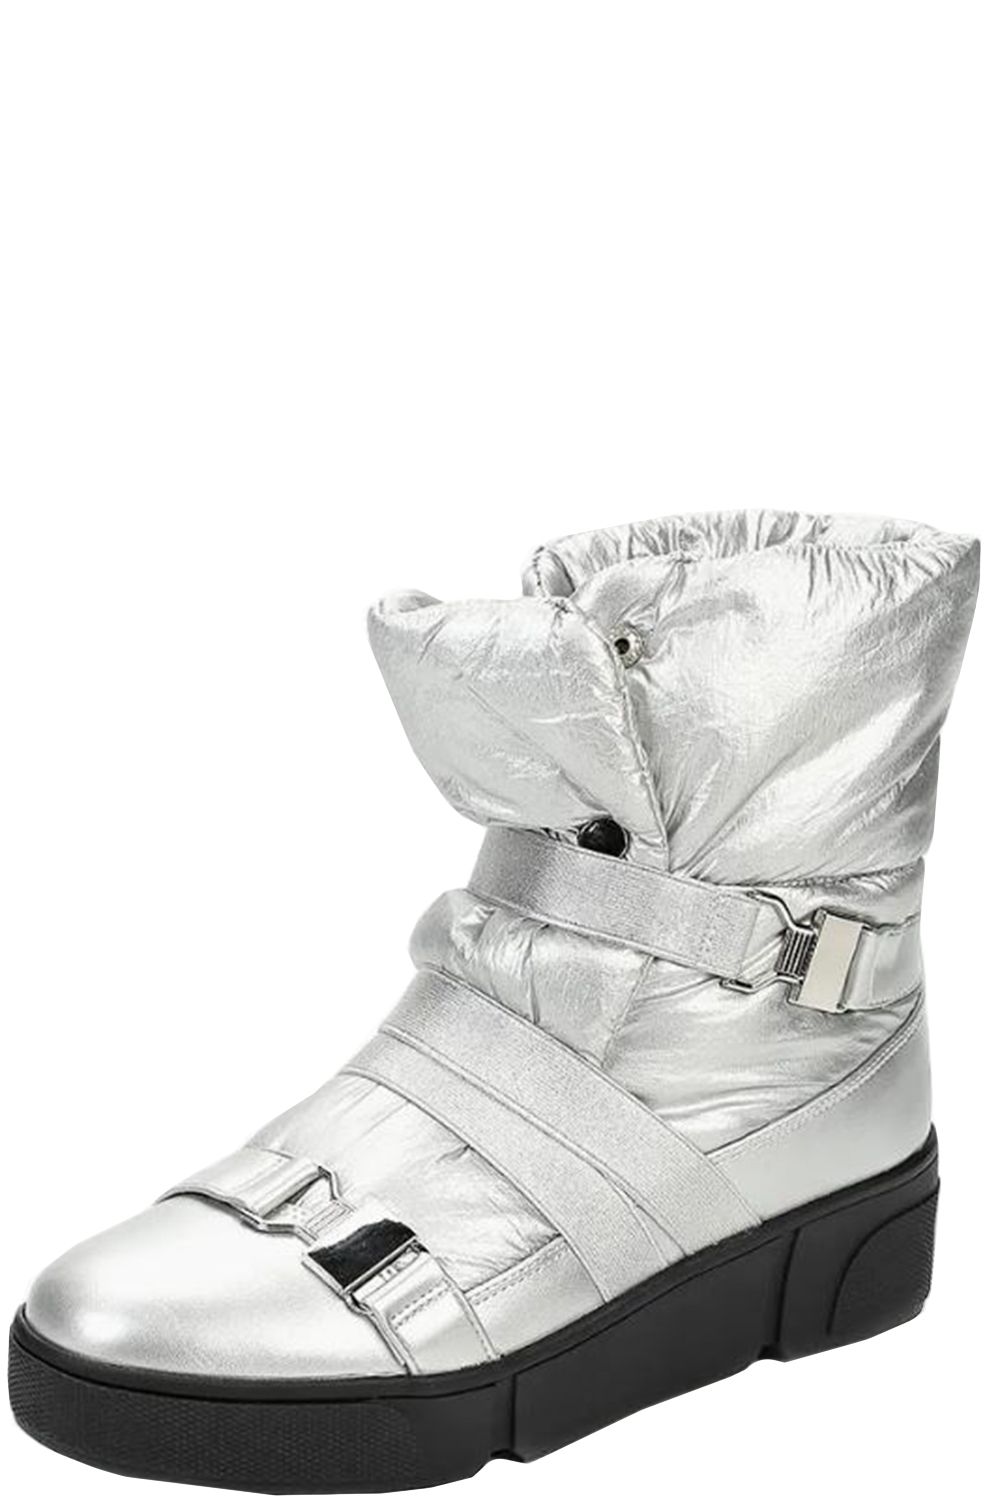 Ботинки Betsy, размер 35, цвет серый